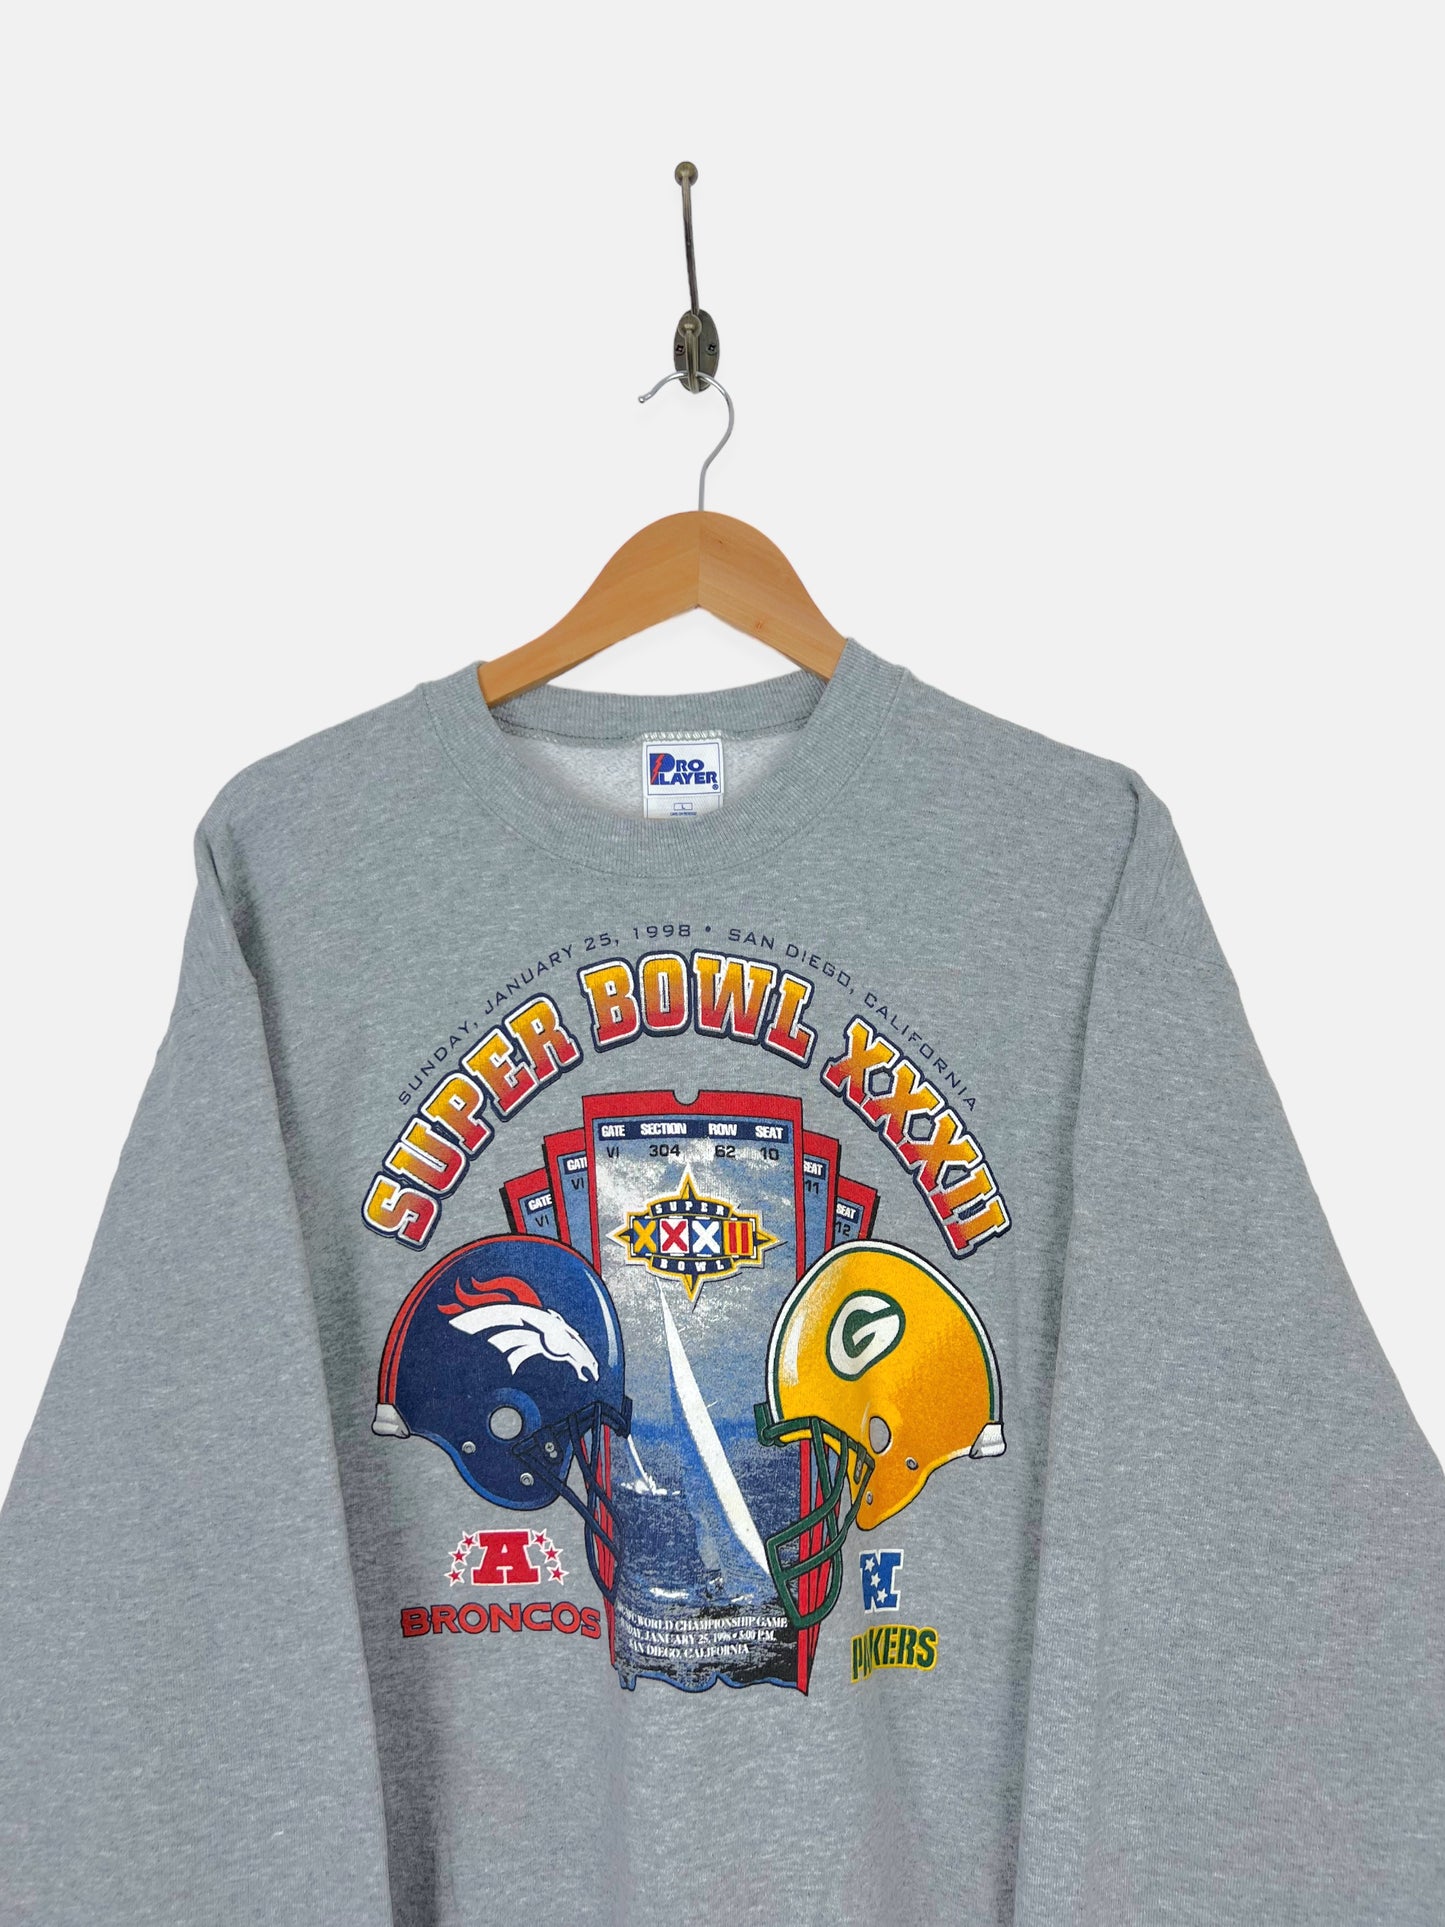 1998 NFL Super Bowl Broncos vs Packers USA Made Vintage Sweatshirt Size M-L